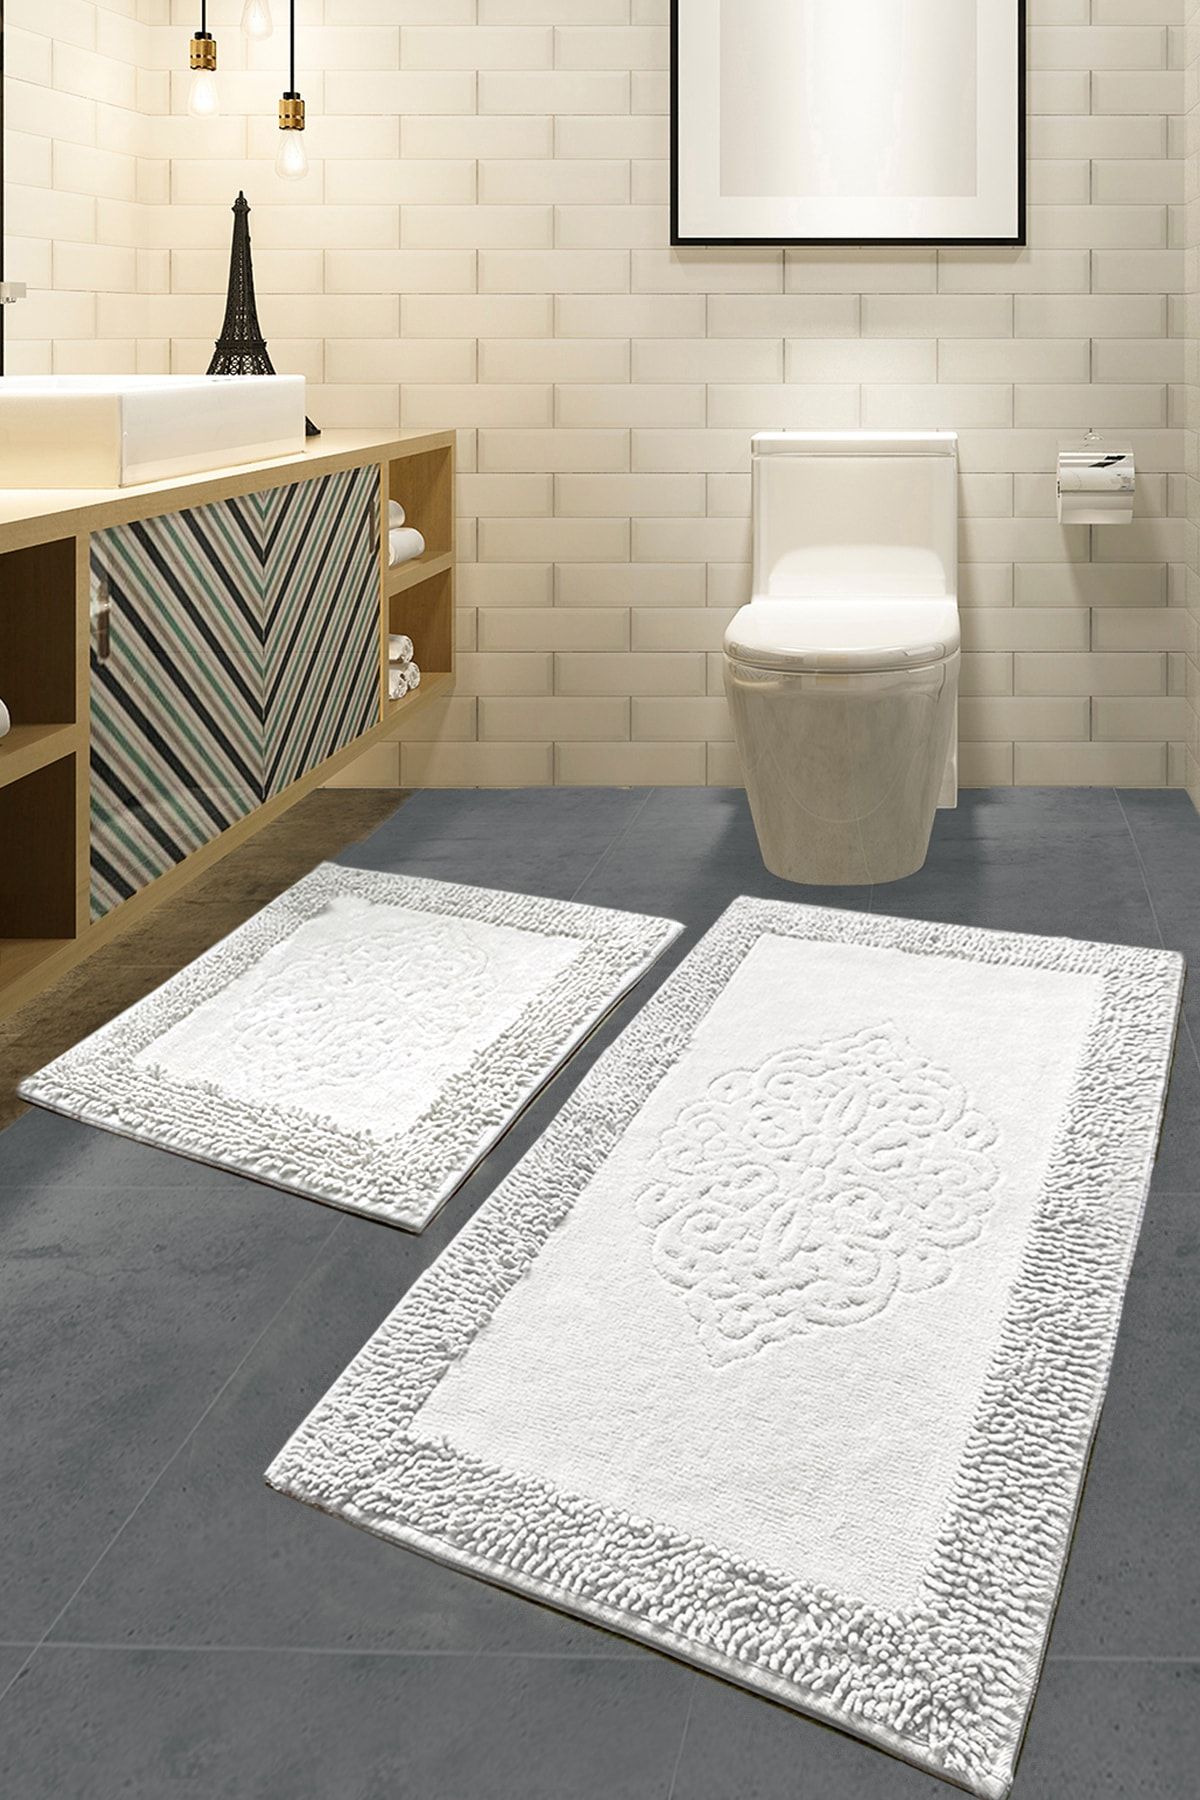 Chilai Home Pıante Cotton Ekru 2 Lı Set 60x100 Cm 50x60 Cm Banyo Halısı, Paspas